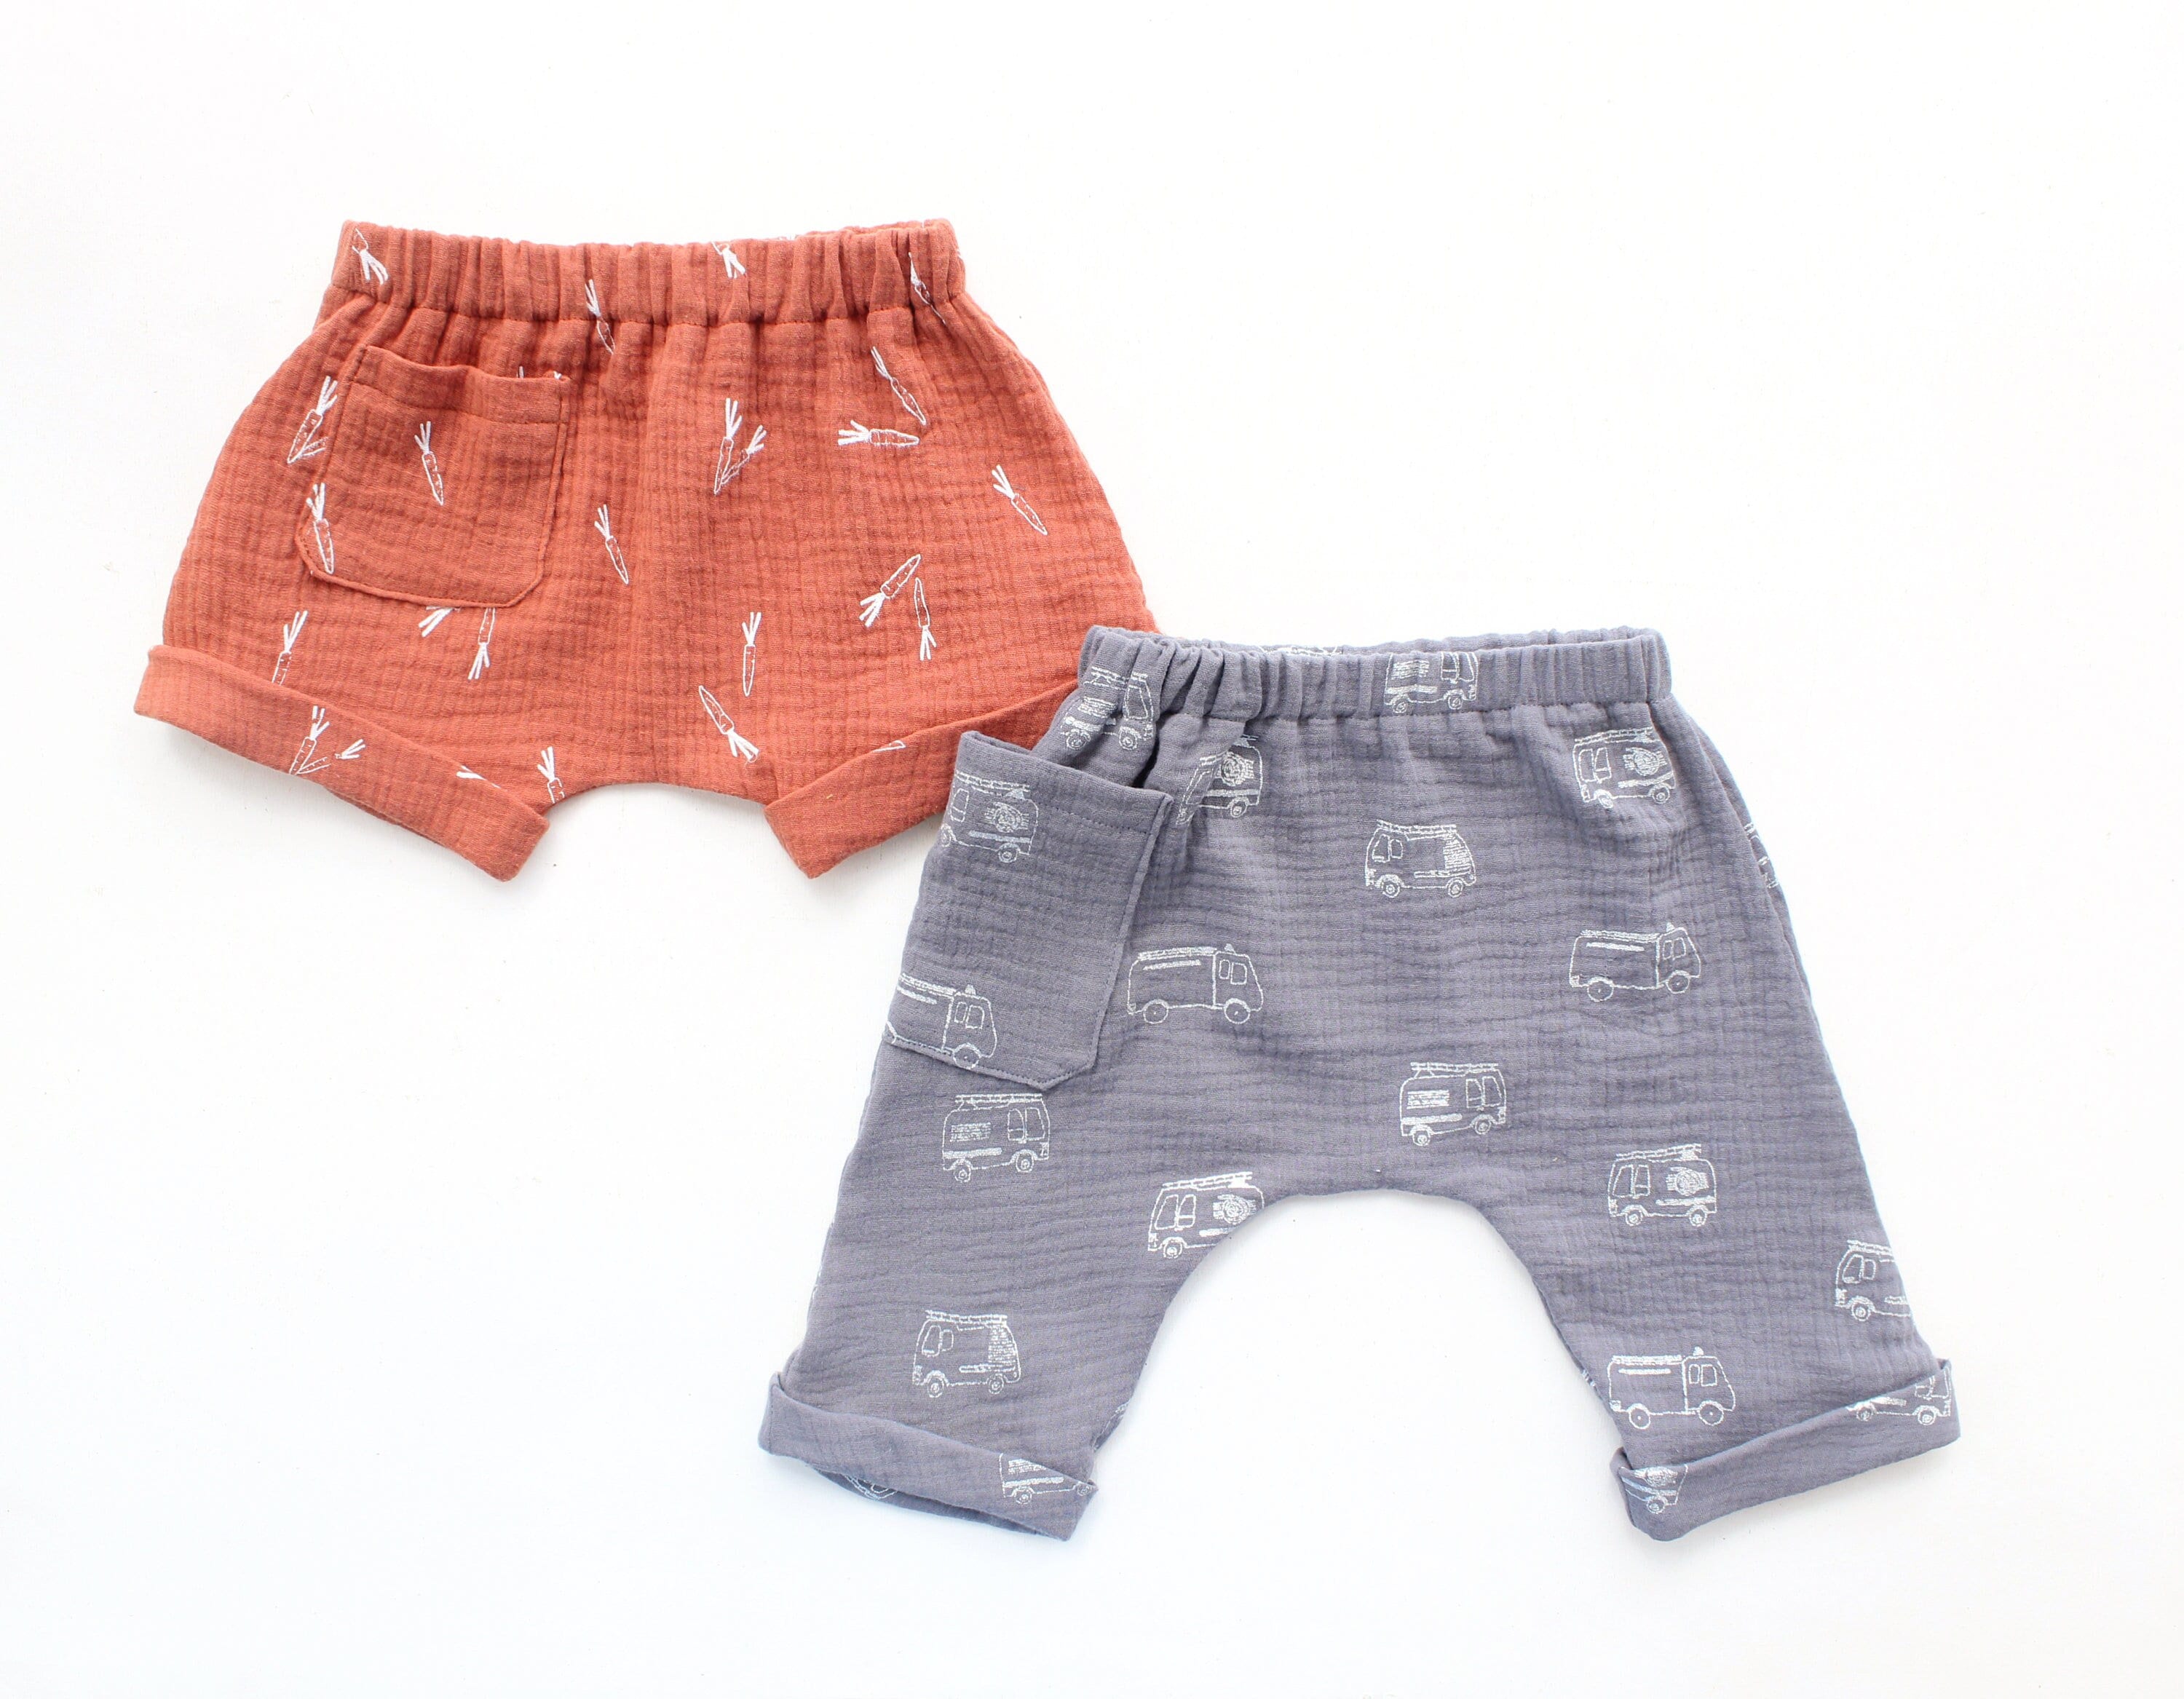 Teddy Boy's Cotton Half Pant Set of 3 (Summer Shorts) - Yummy Mummys